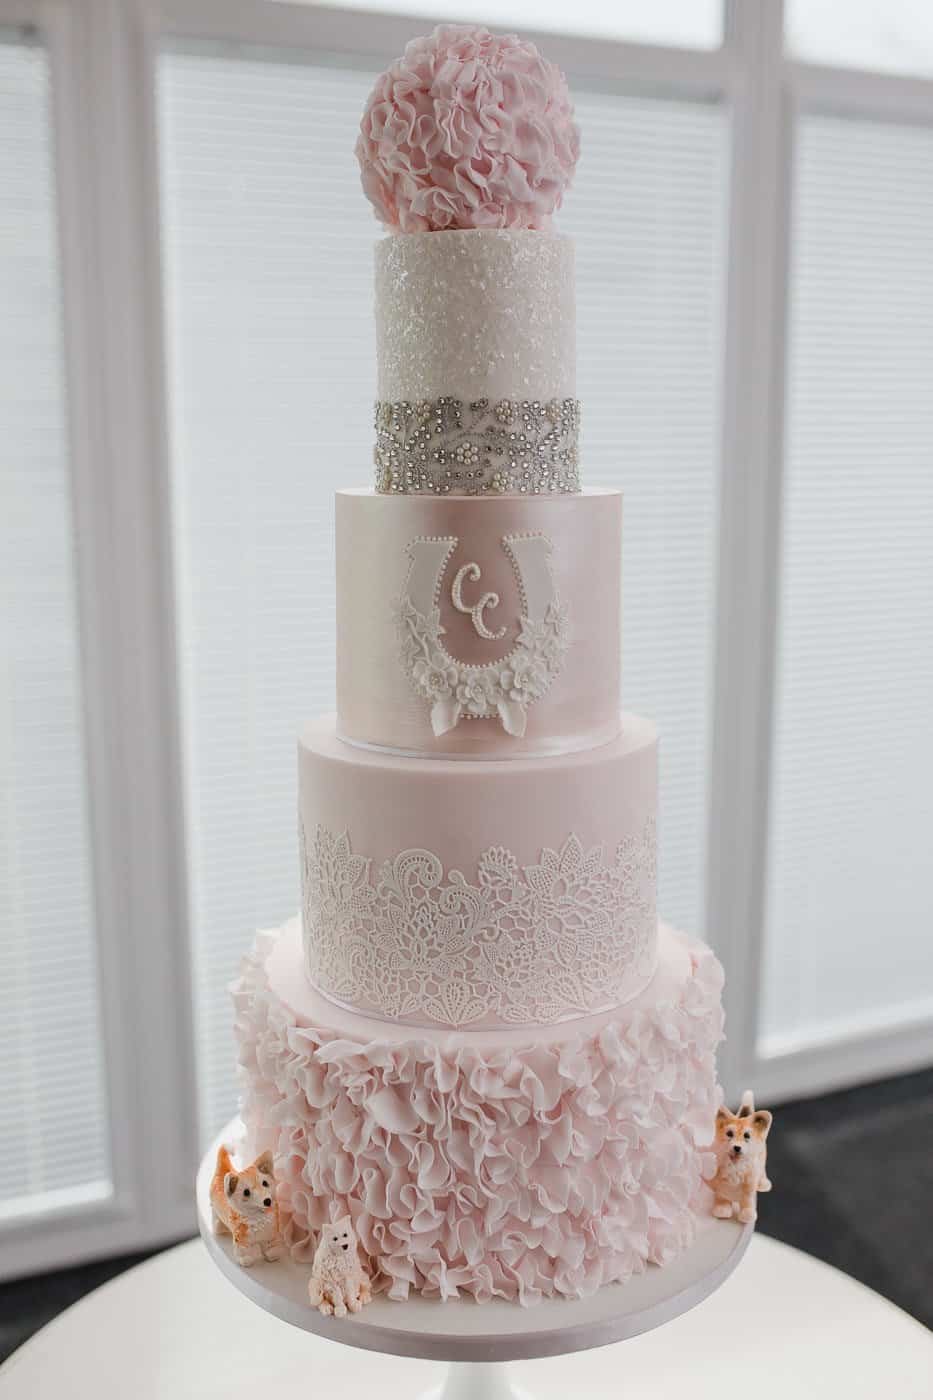 28-oldwalls-gower-wedding-cake.jpg